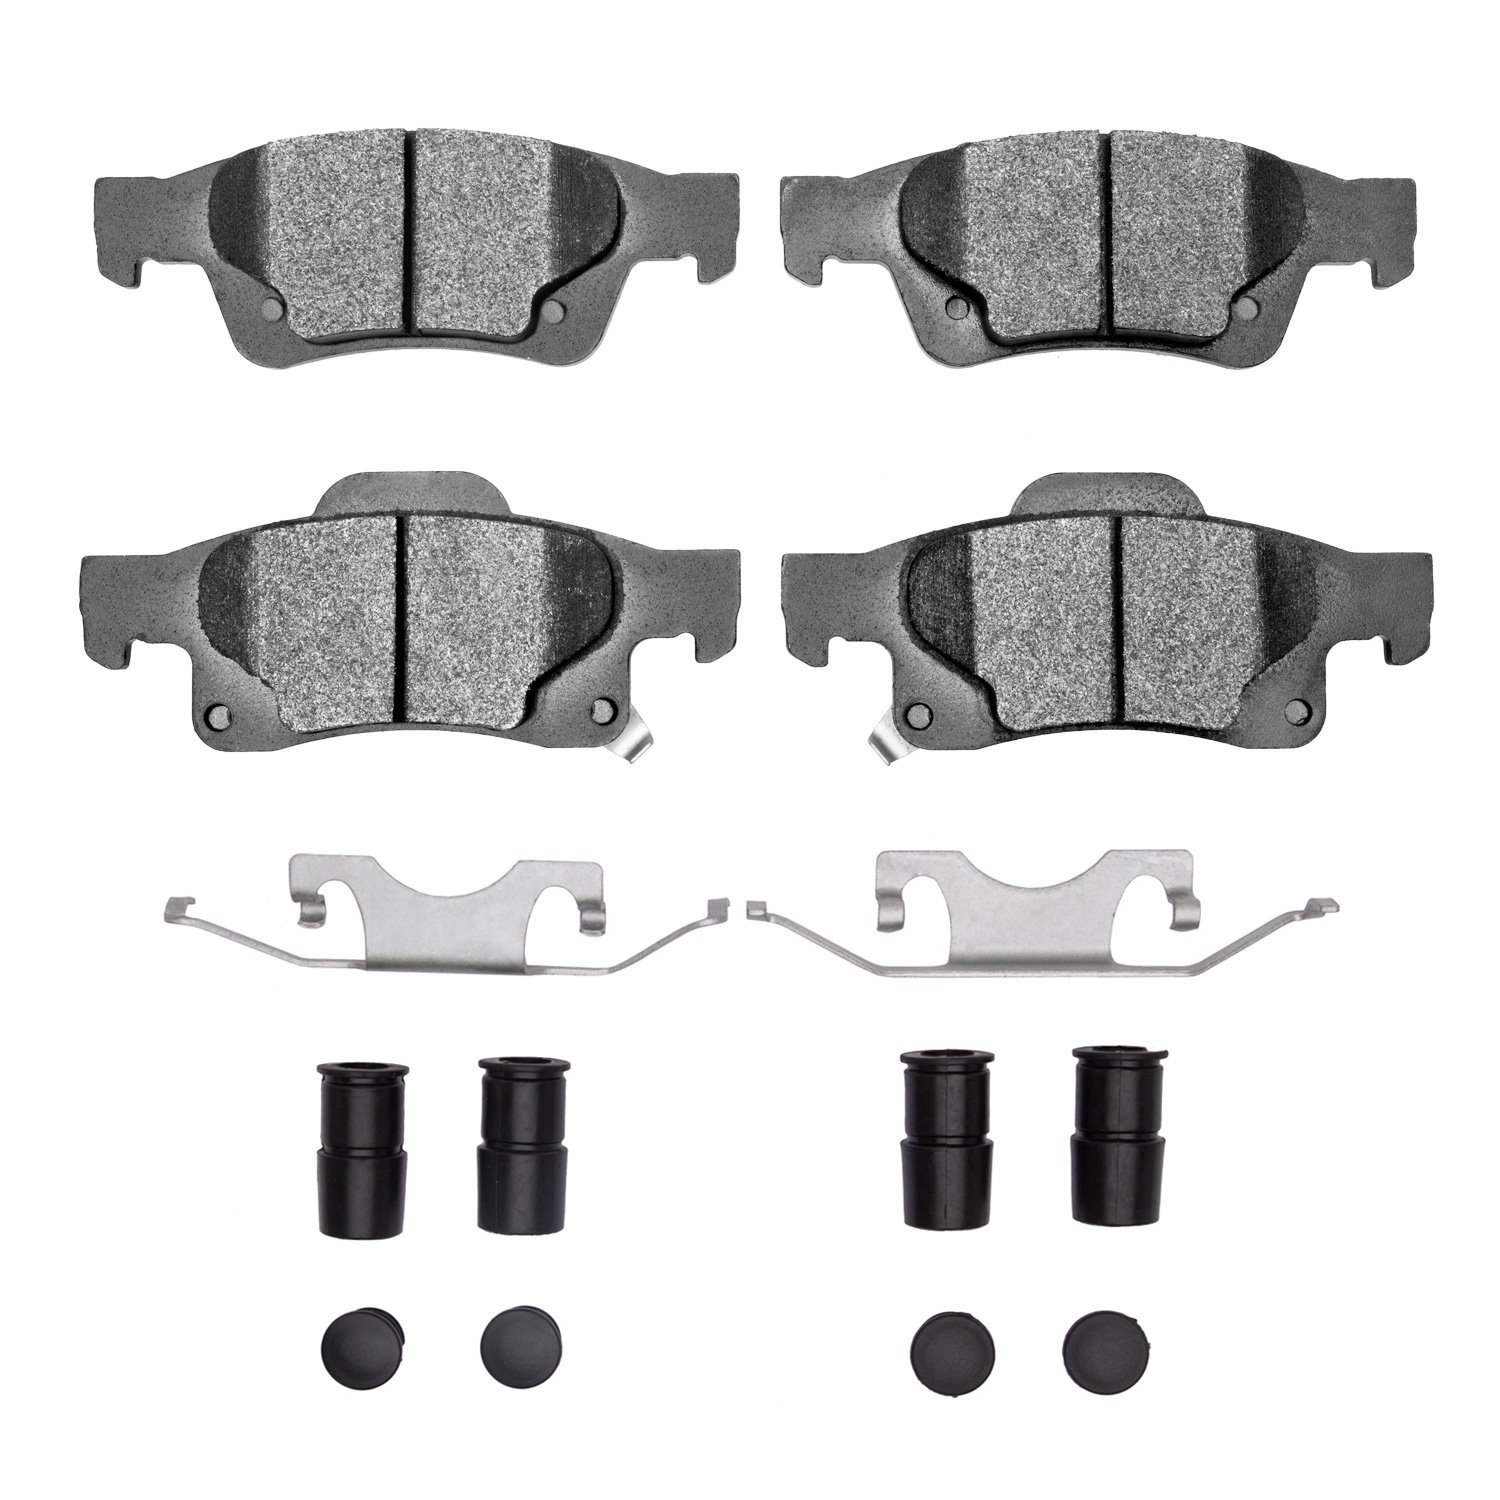 1400-1498-01 Ultimate-Duty Brake Pads & Hardware Kit, Fits Select Mopar, Position: Rear